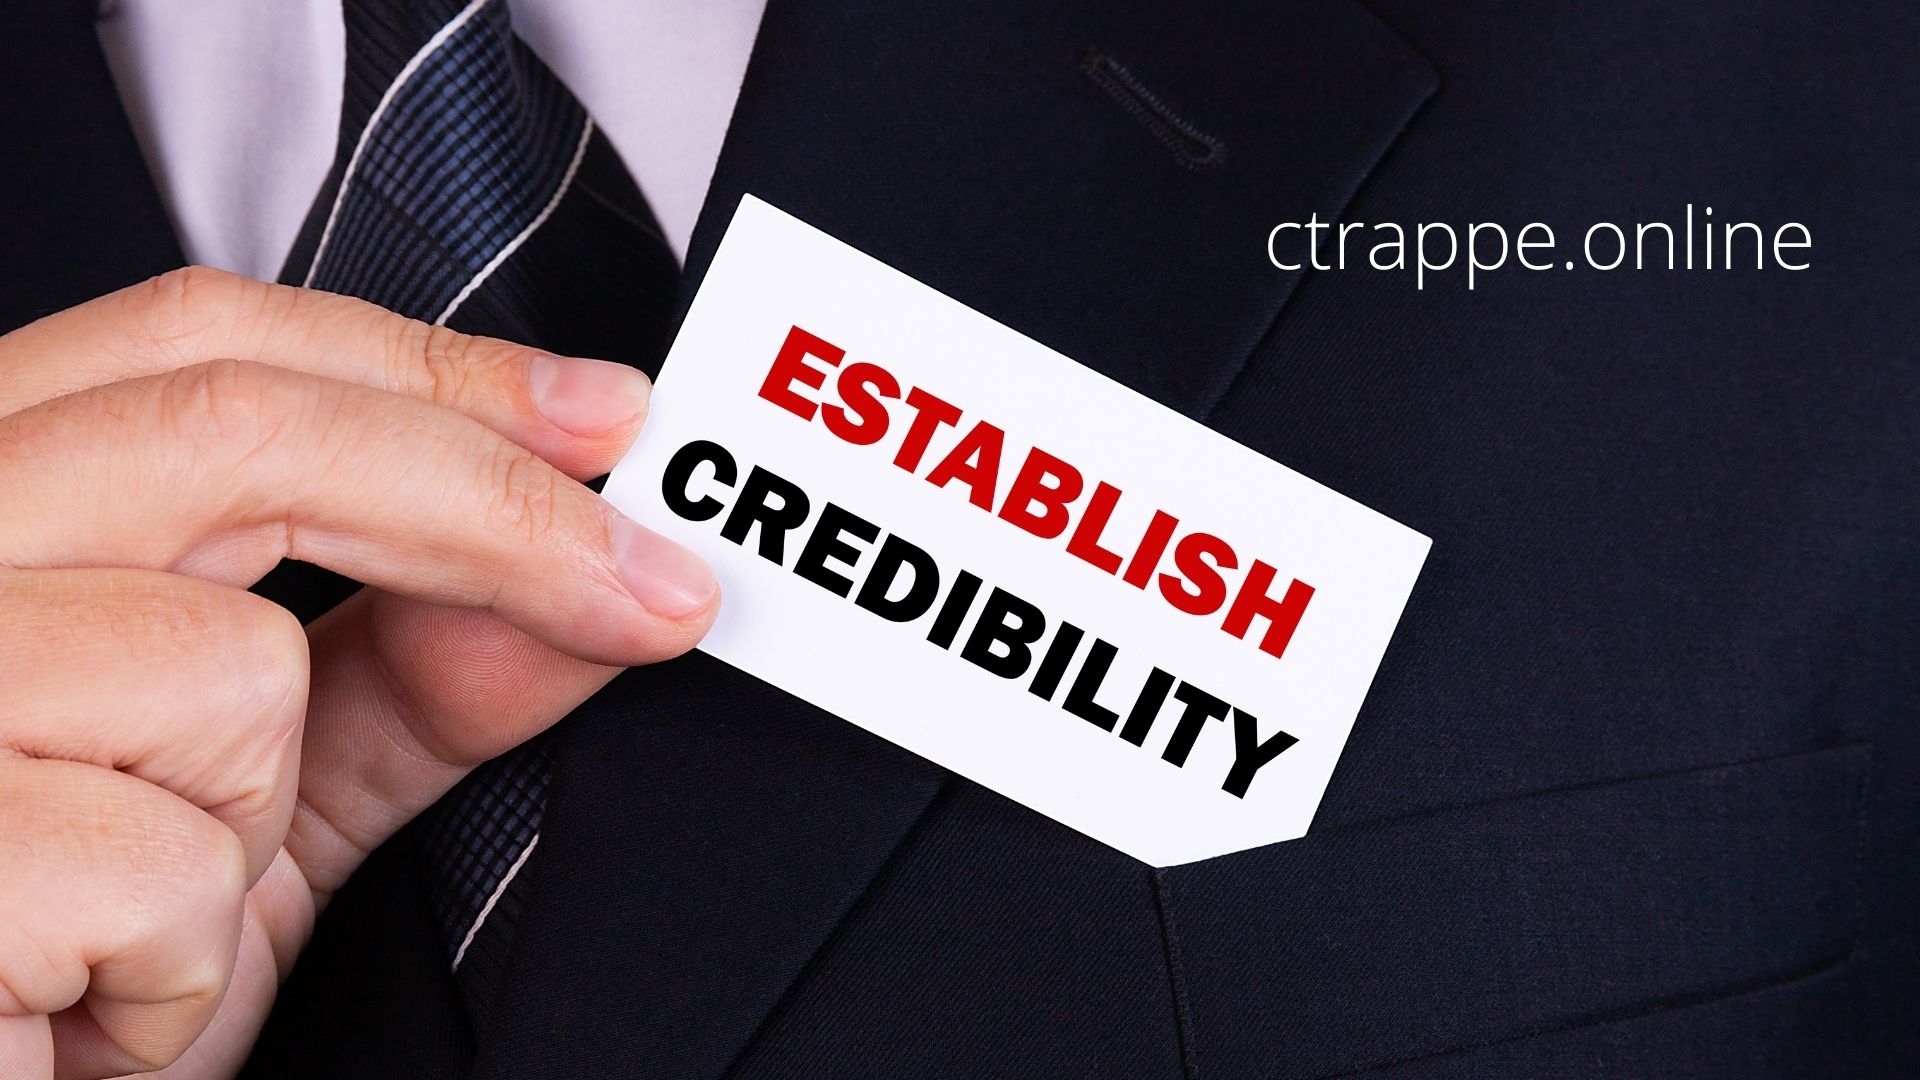 Building credibility